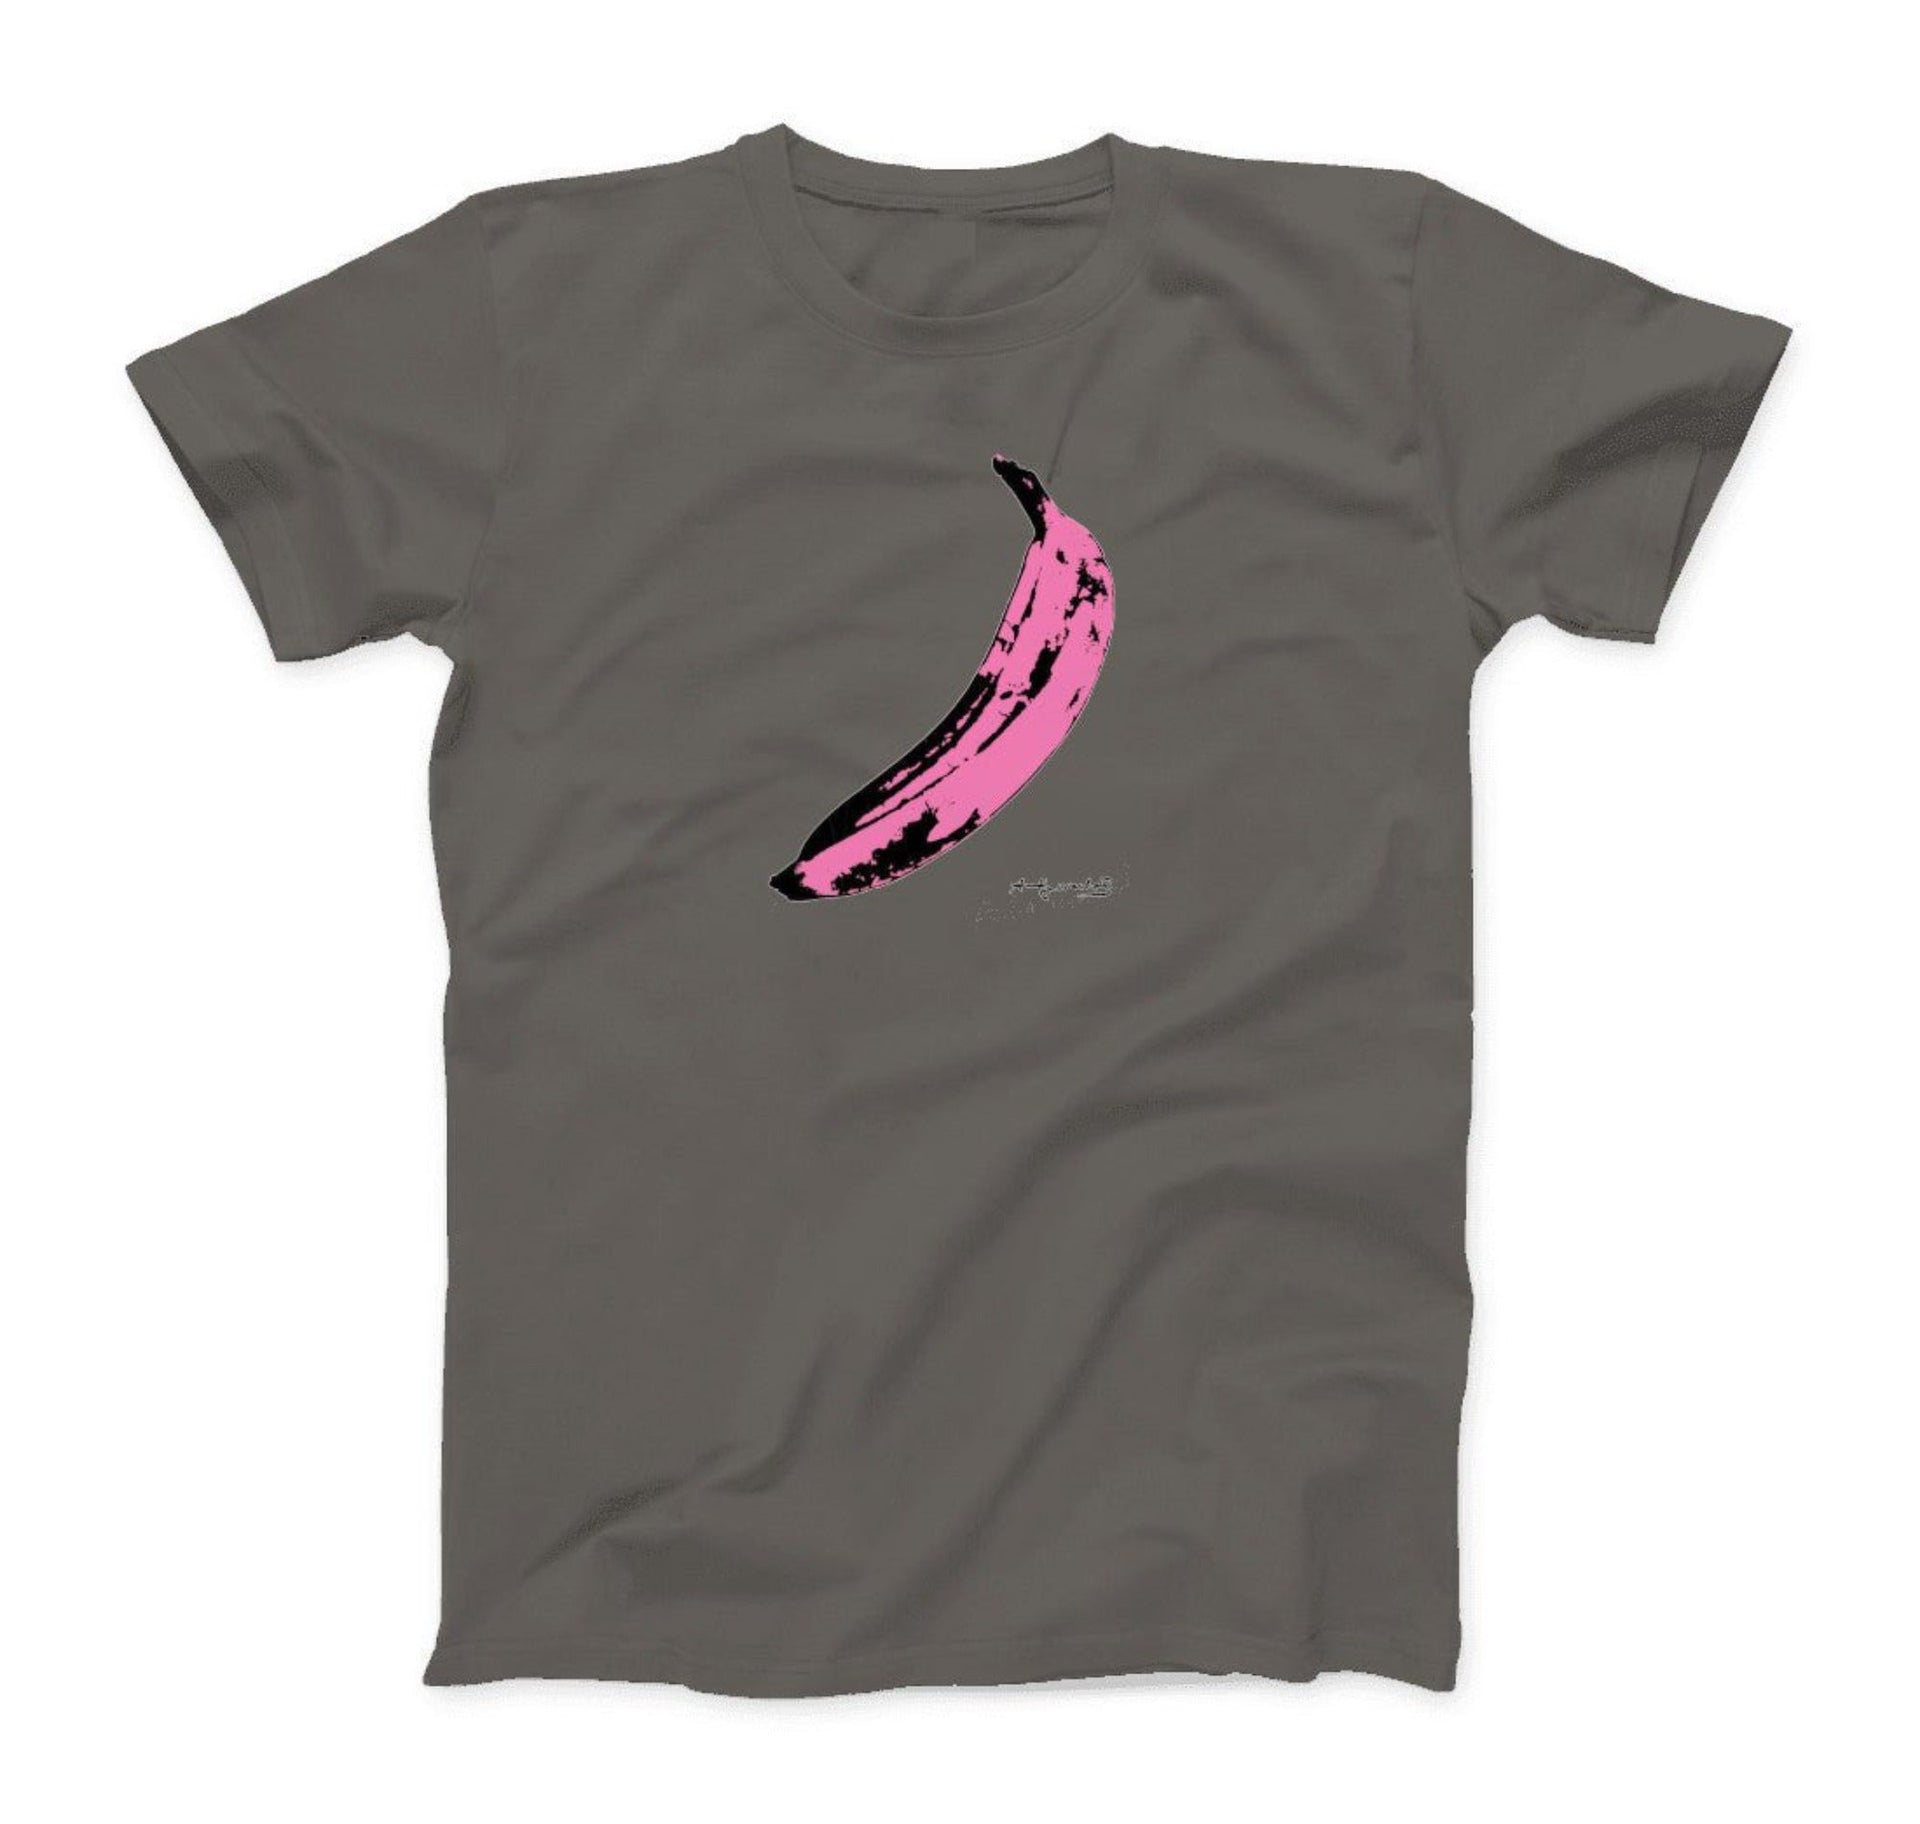 Andy Warhol Pink Banana 1967 Pop Art T-shirt - Clothing - Harvey Ltd